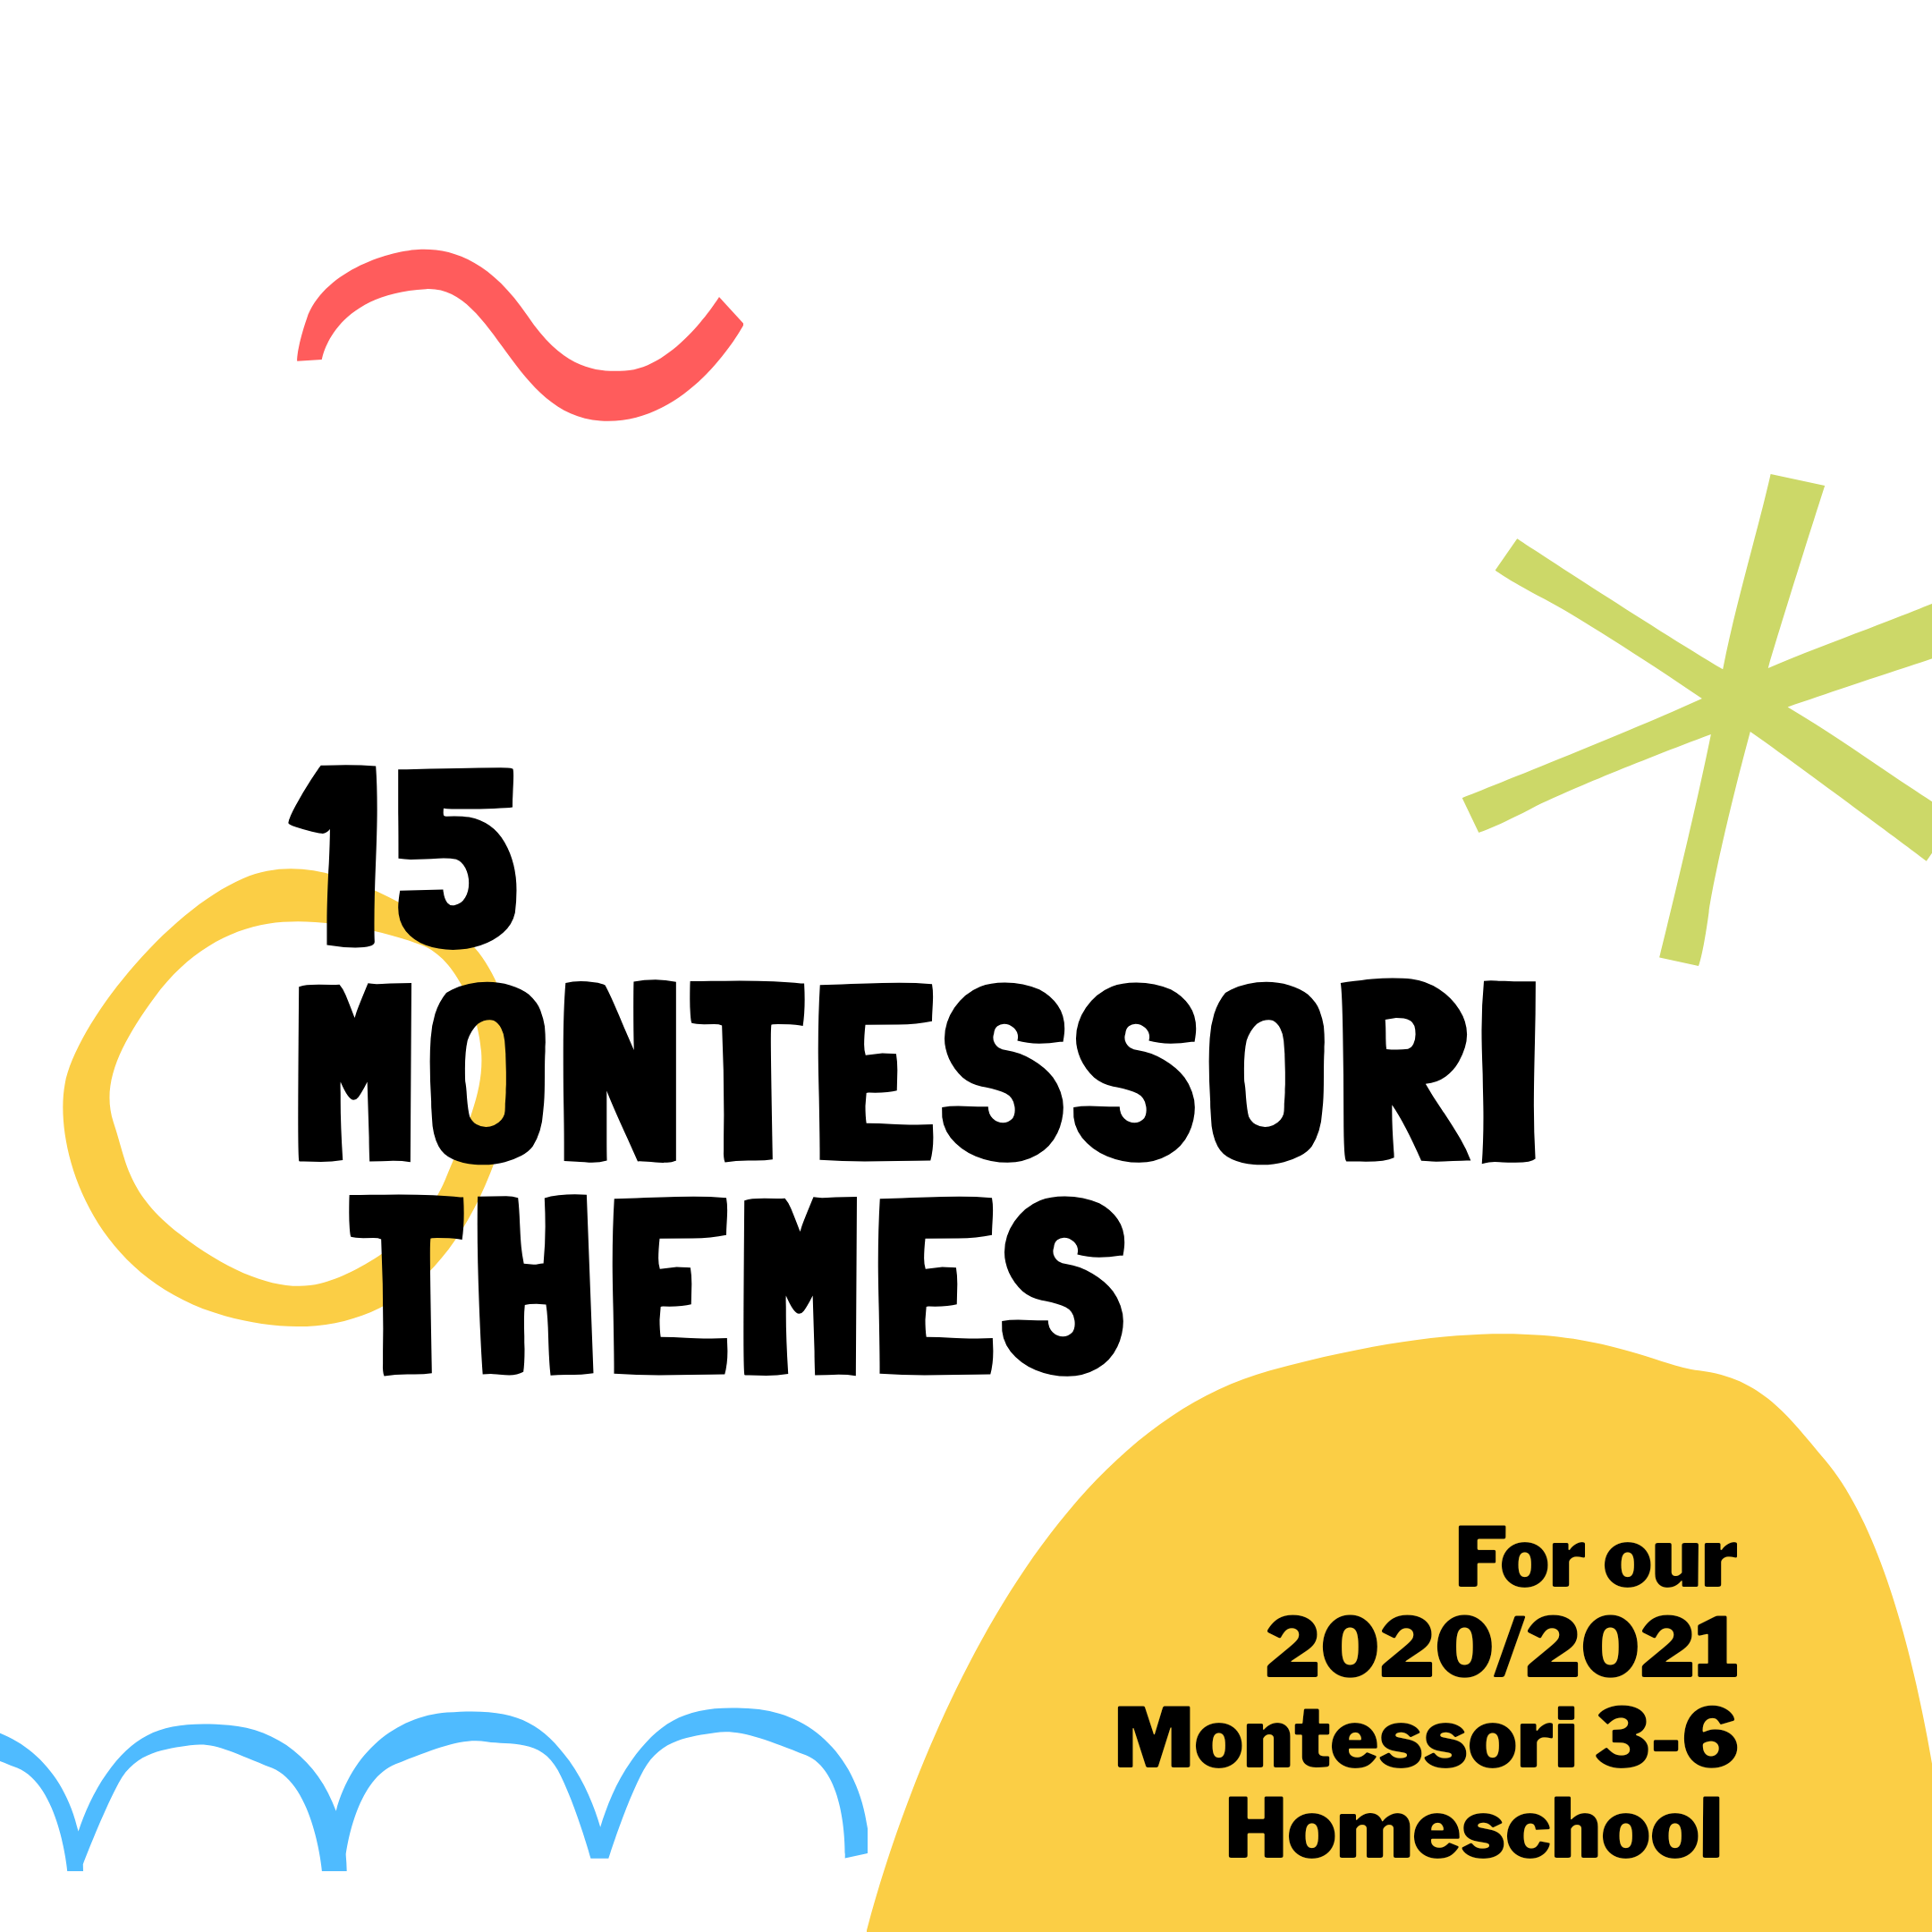 2020/2021 Themes for our 3-6 Montessori Homeschool